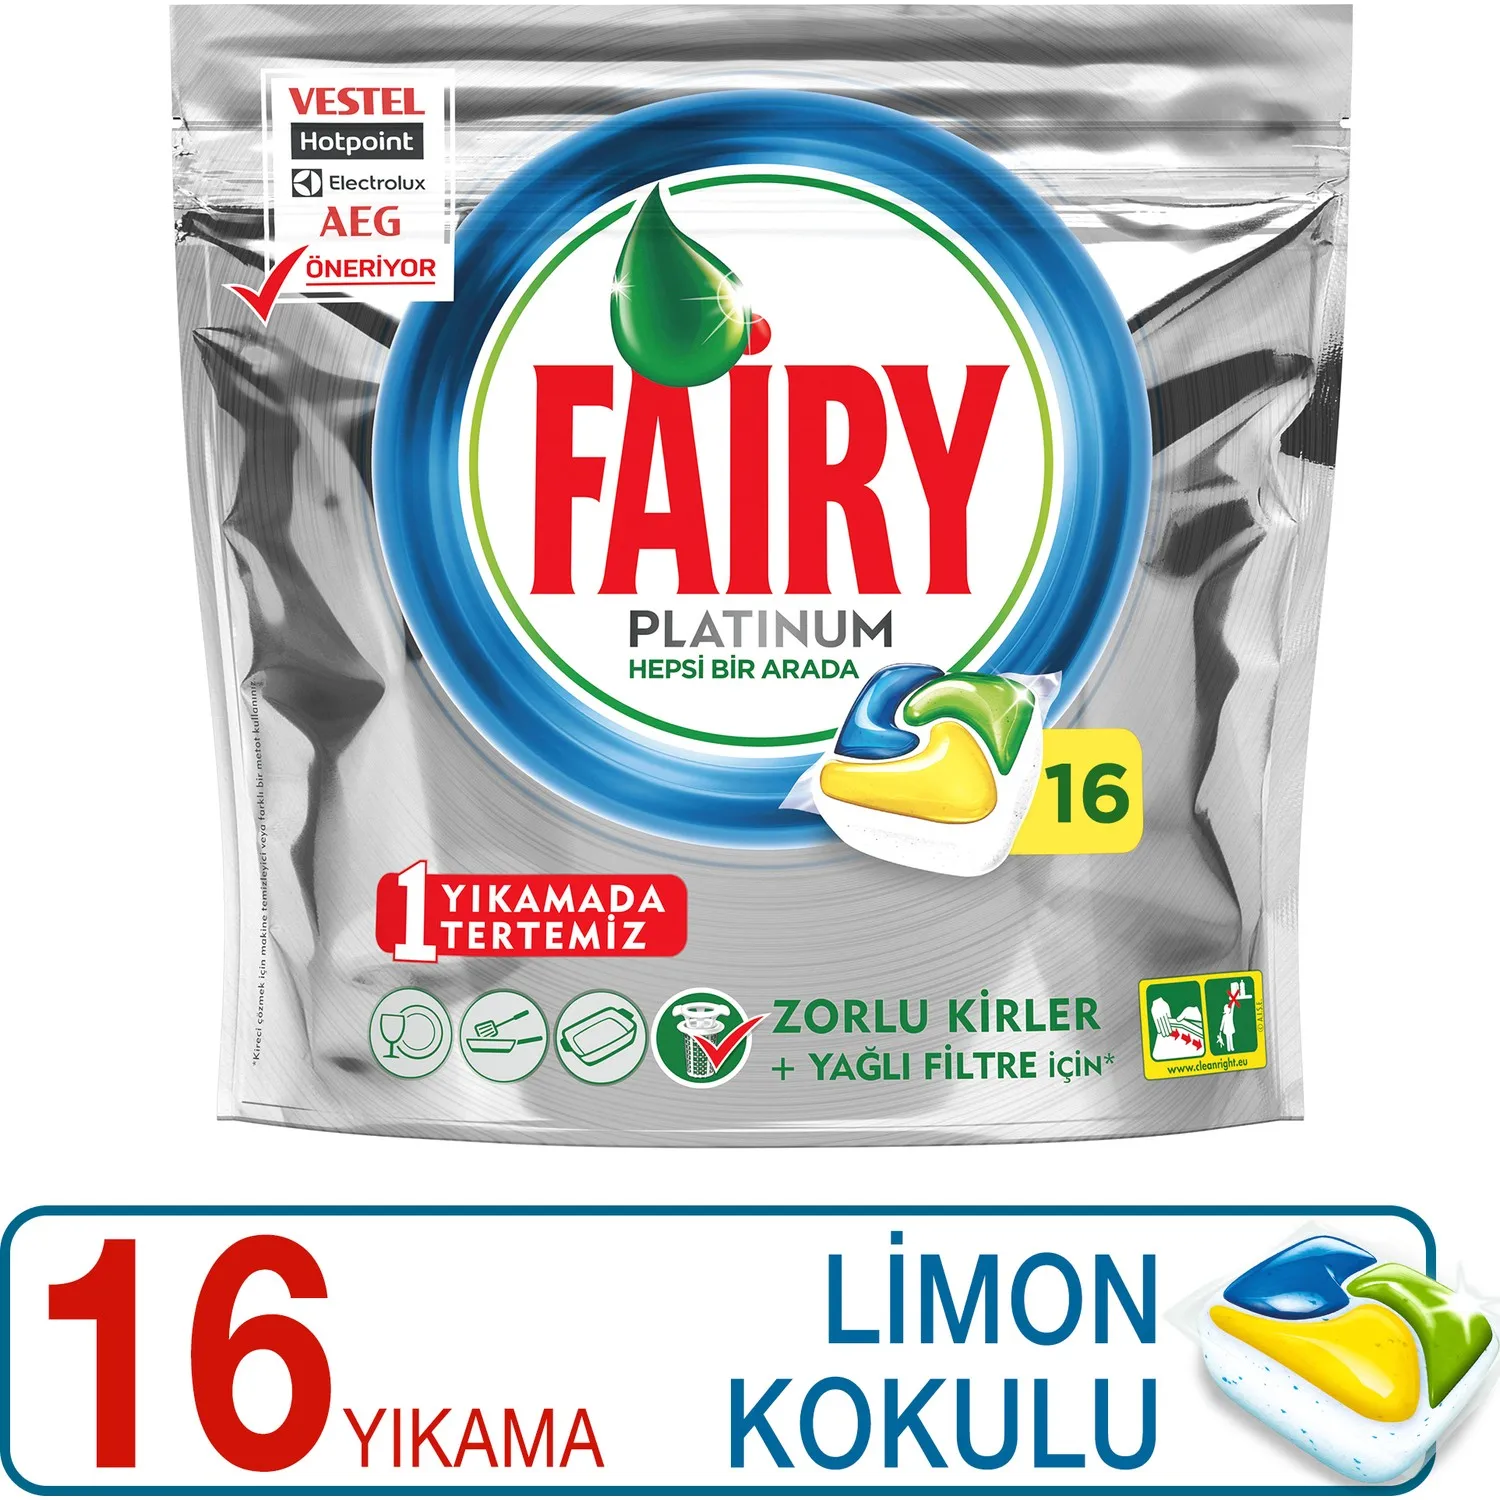 for fairy platinum capsul detergent 16 buy bulk detergent washing dishes dish washes europe washing capsul detergent product on alibaba com